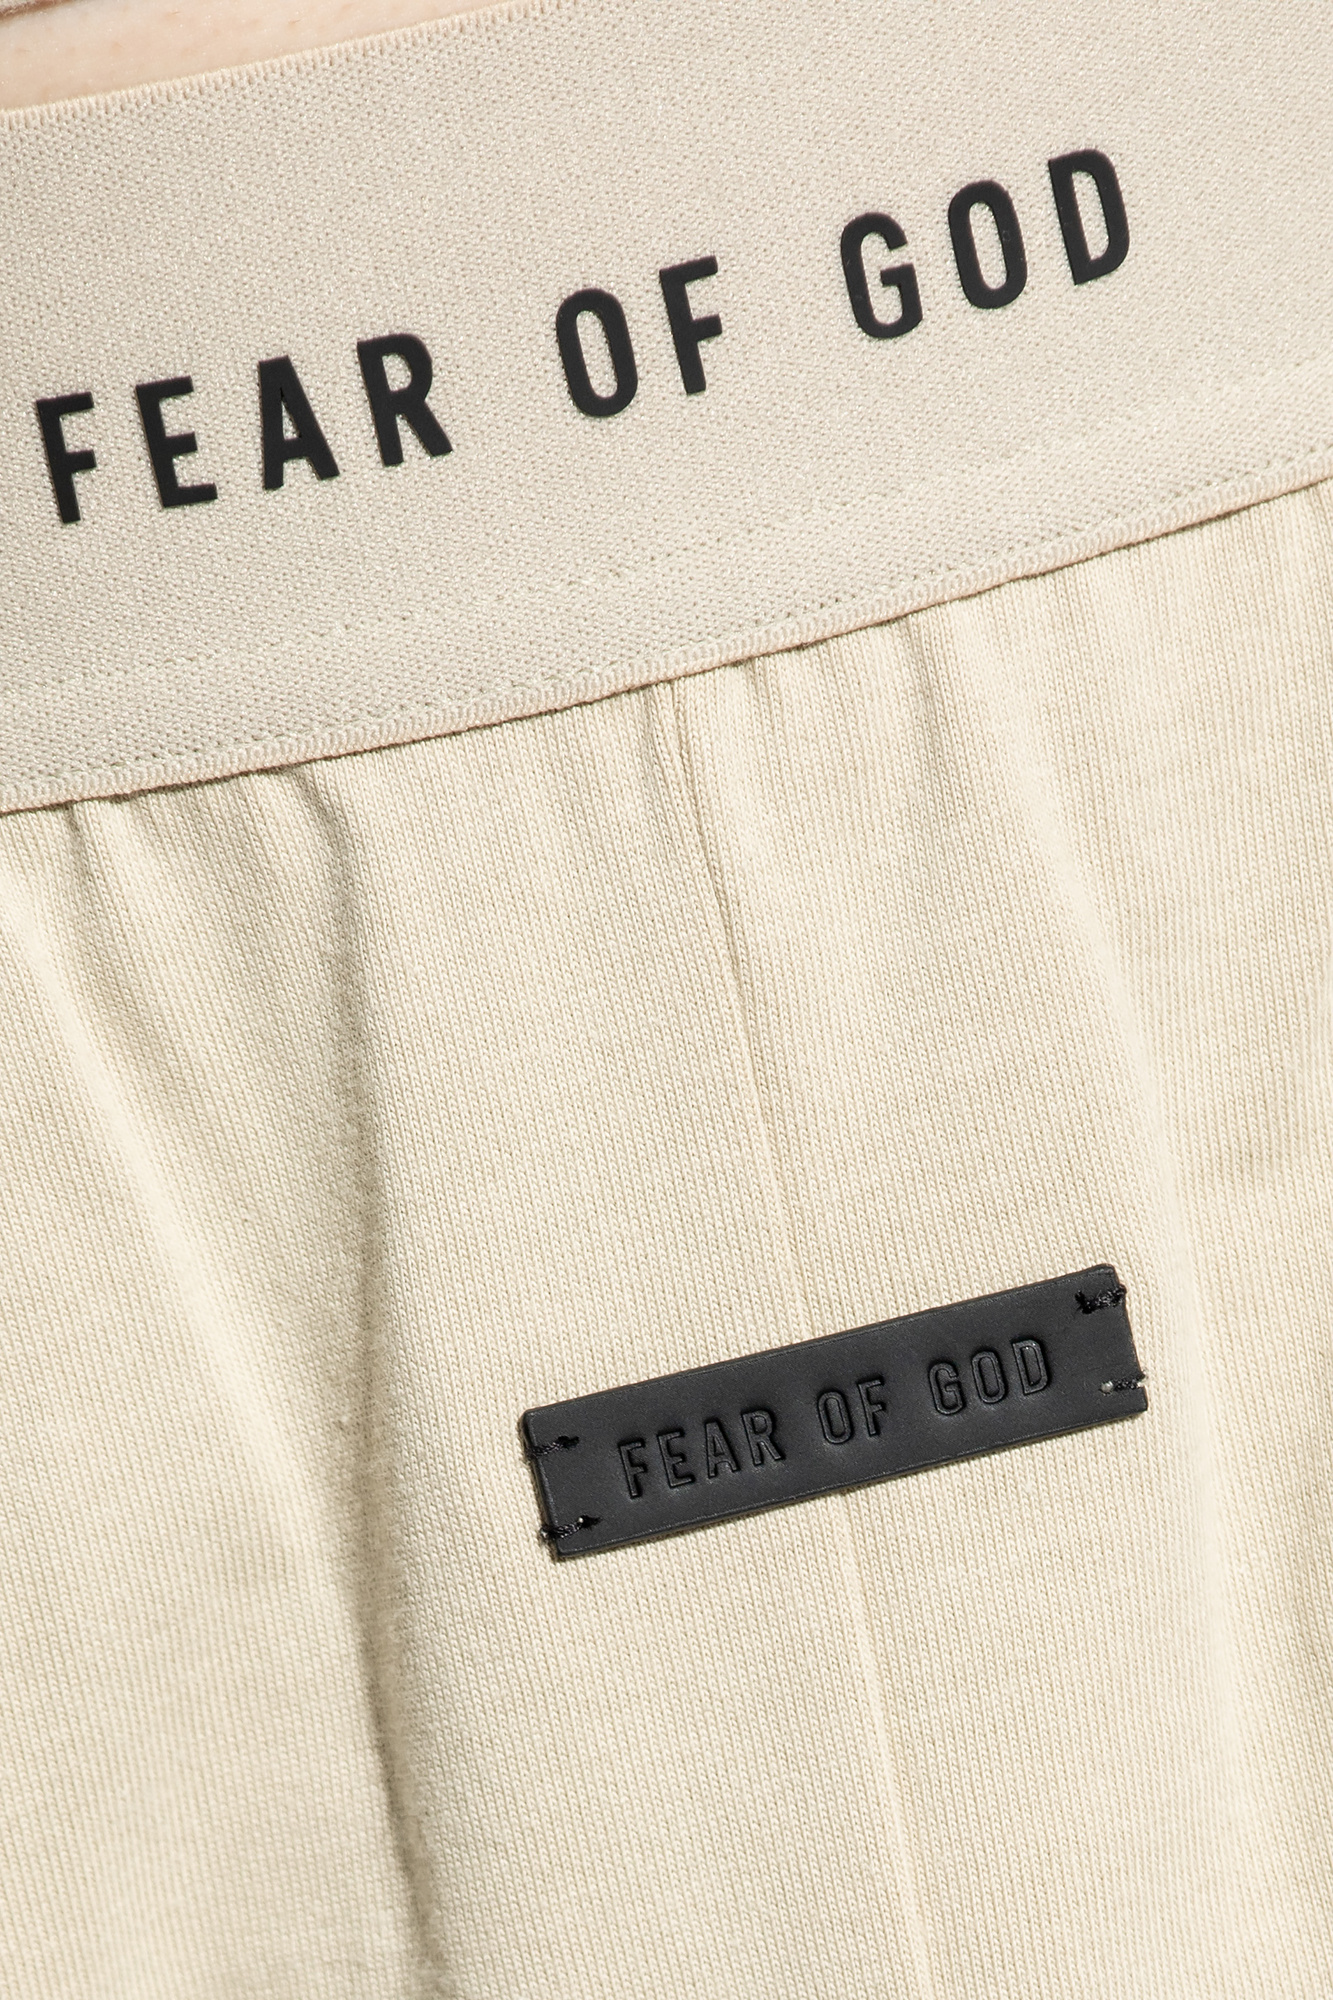 Fear Of God Cotton sweatpants